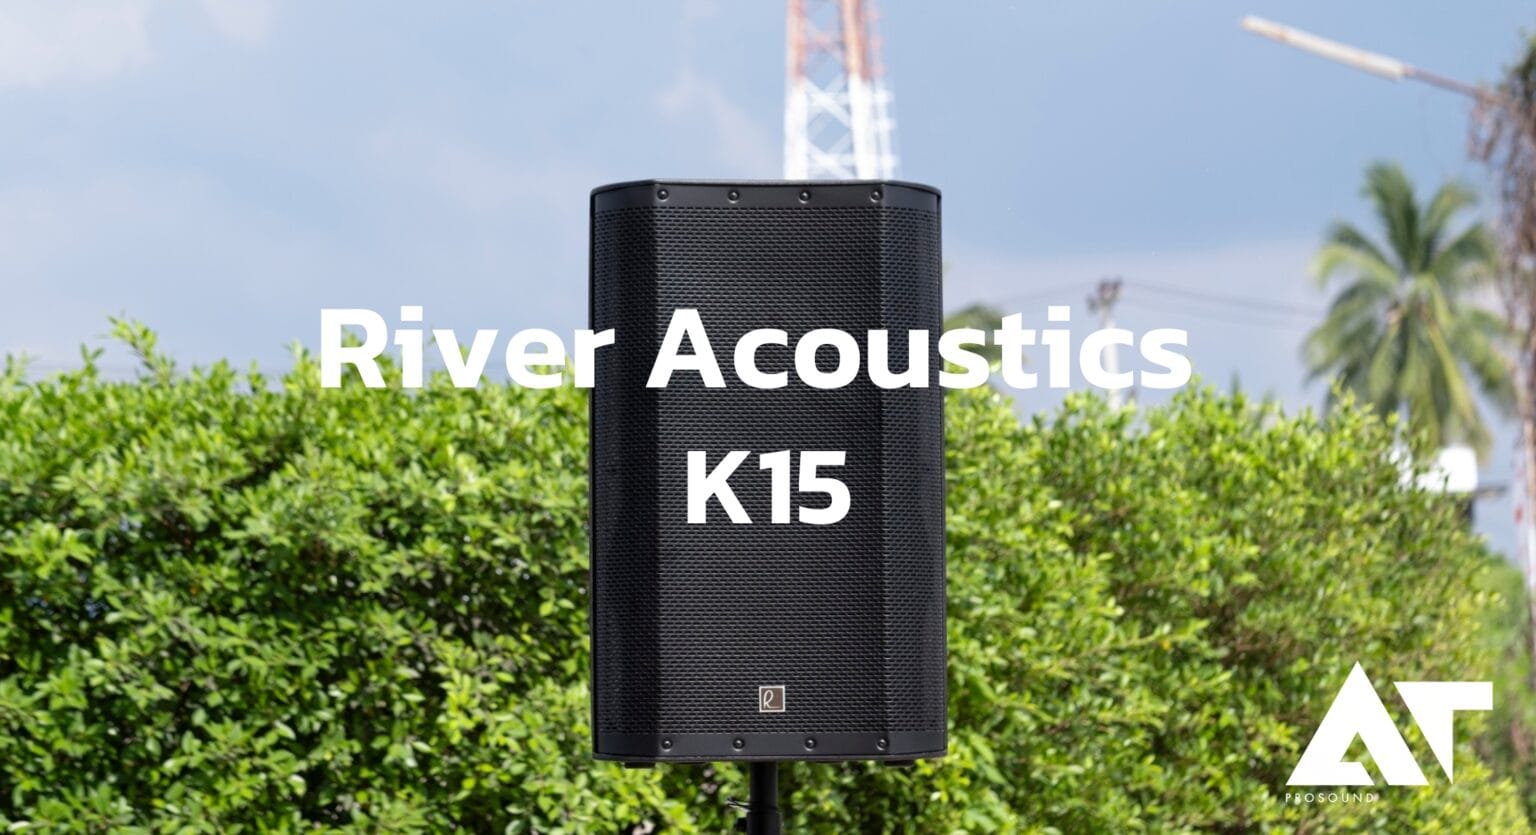 River Acoustics K15